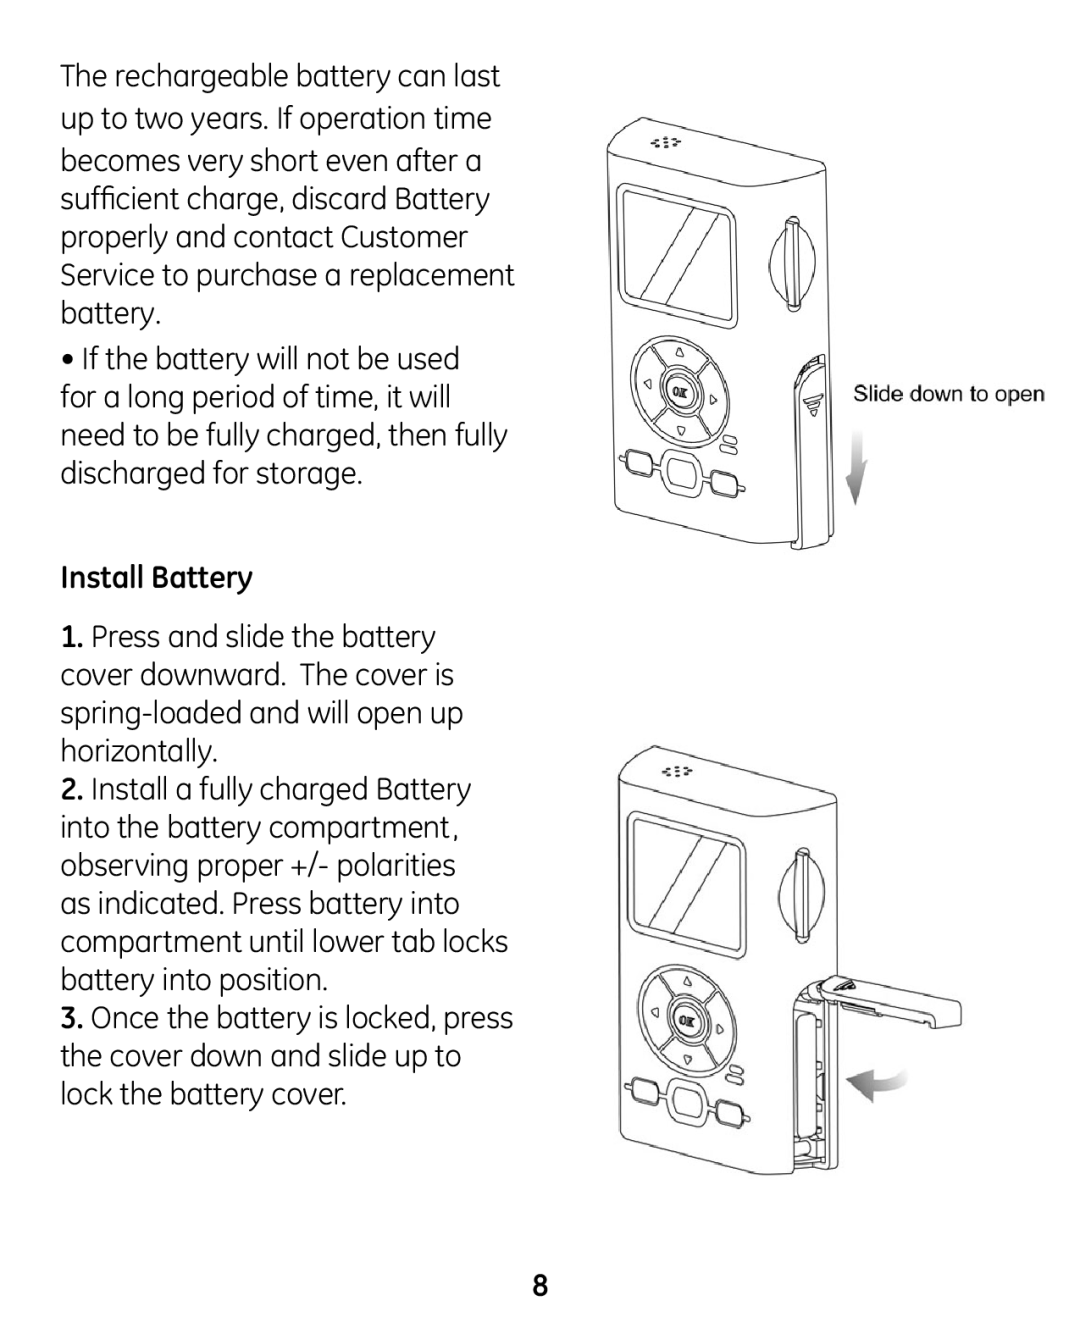 GE 45227-1 manual Install Battery 